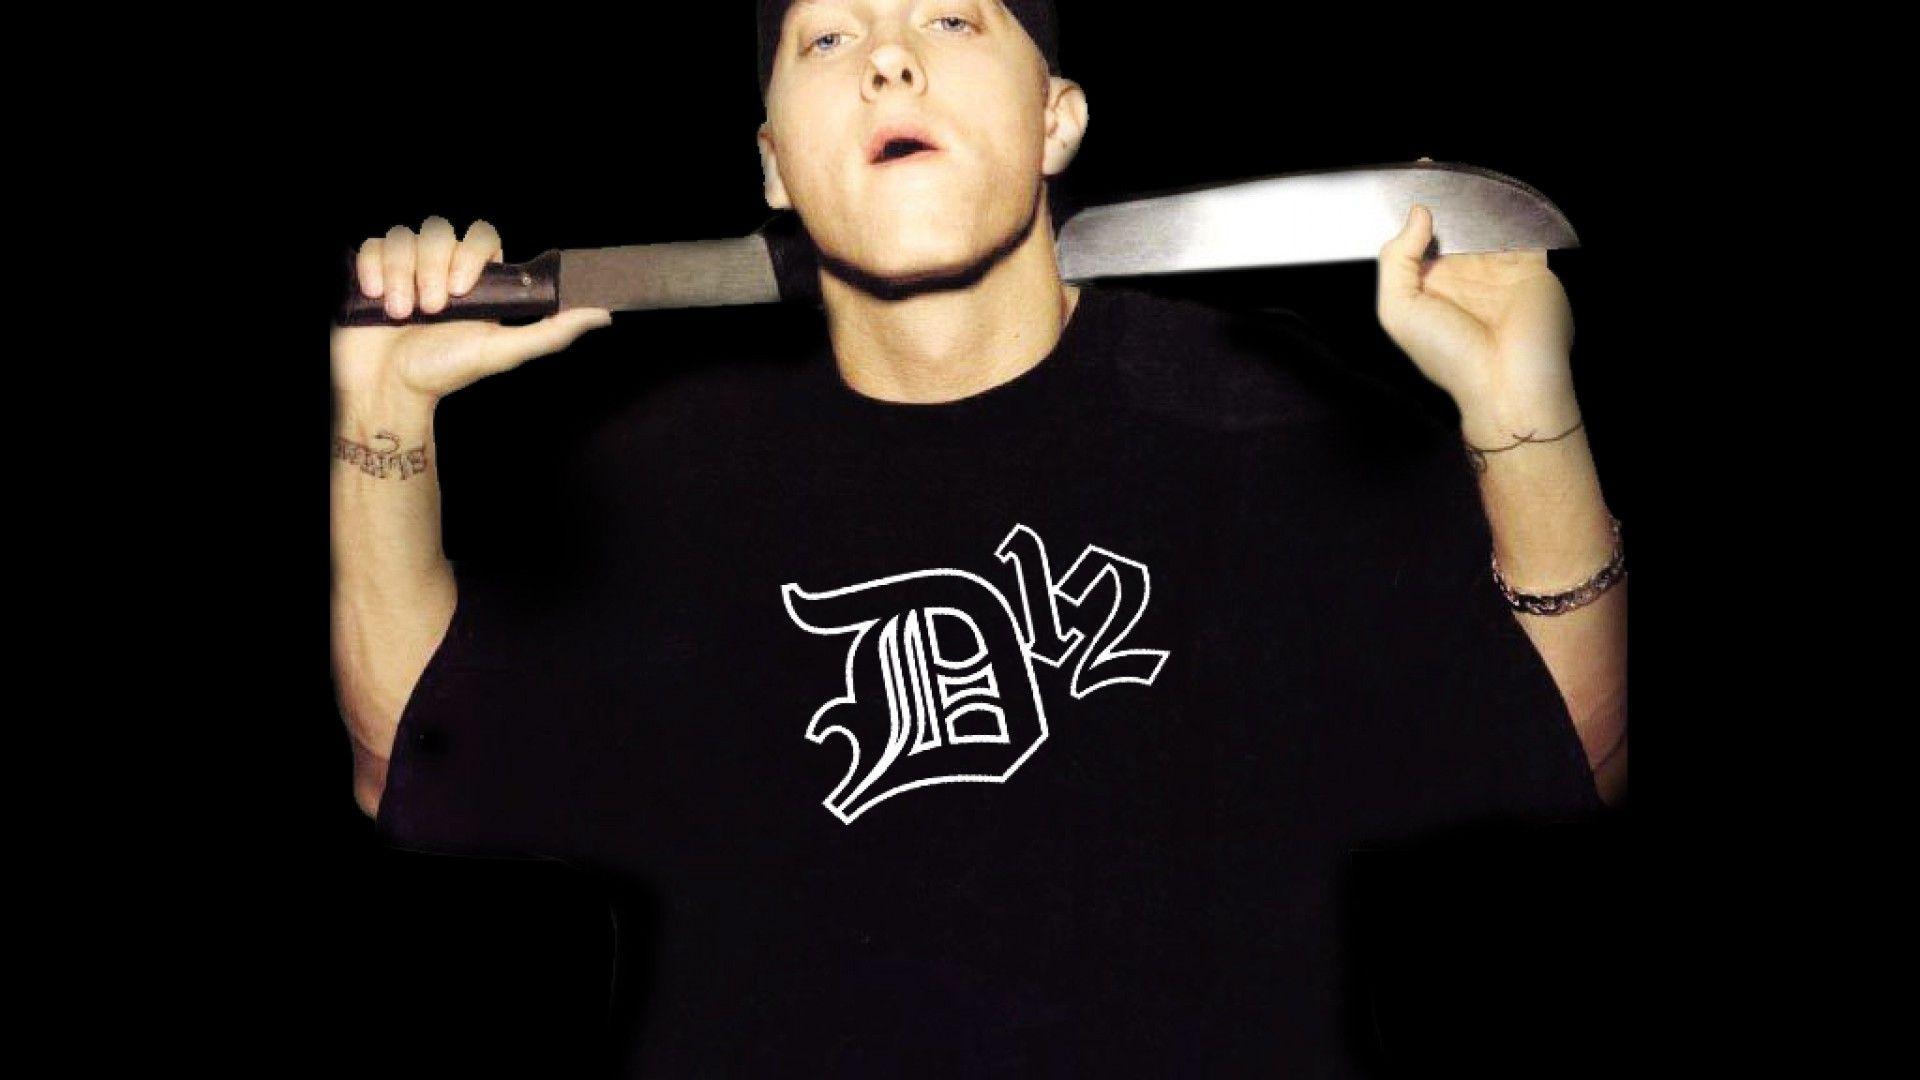 Hd Image Of Eminem